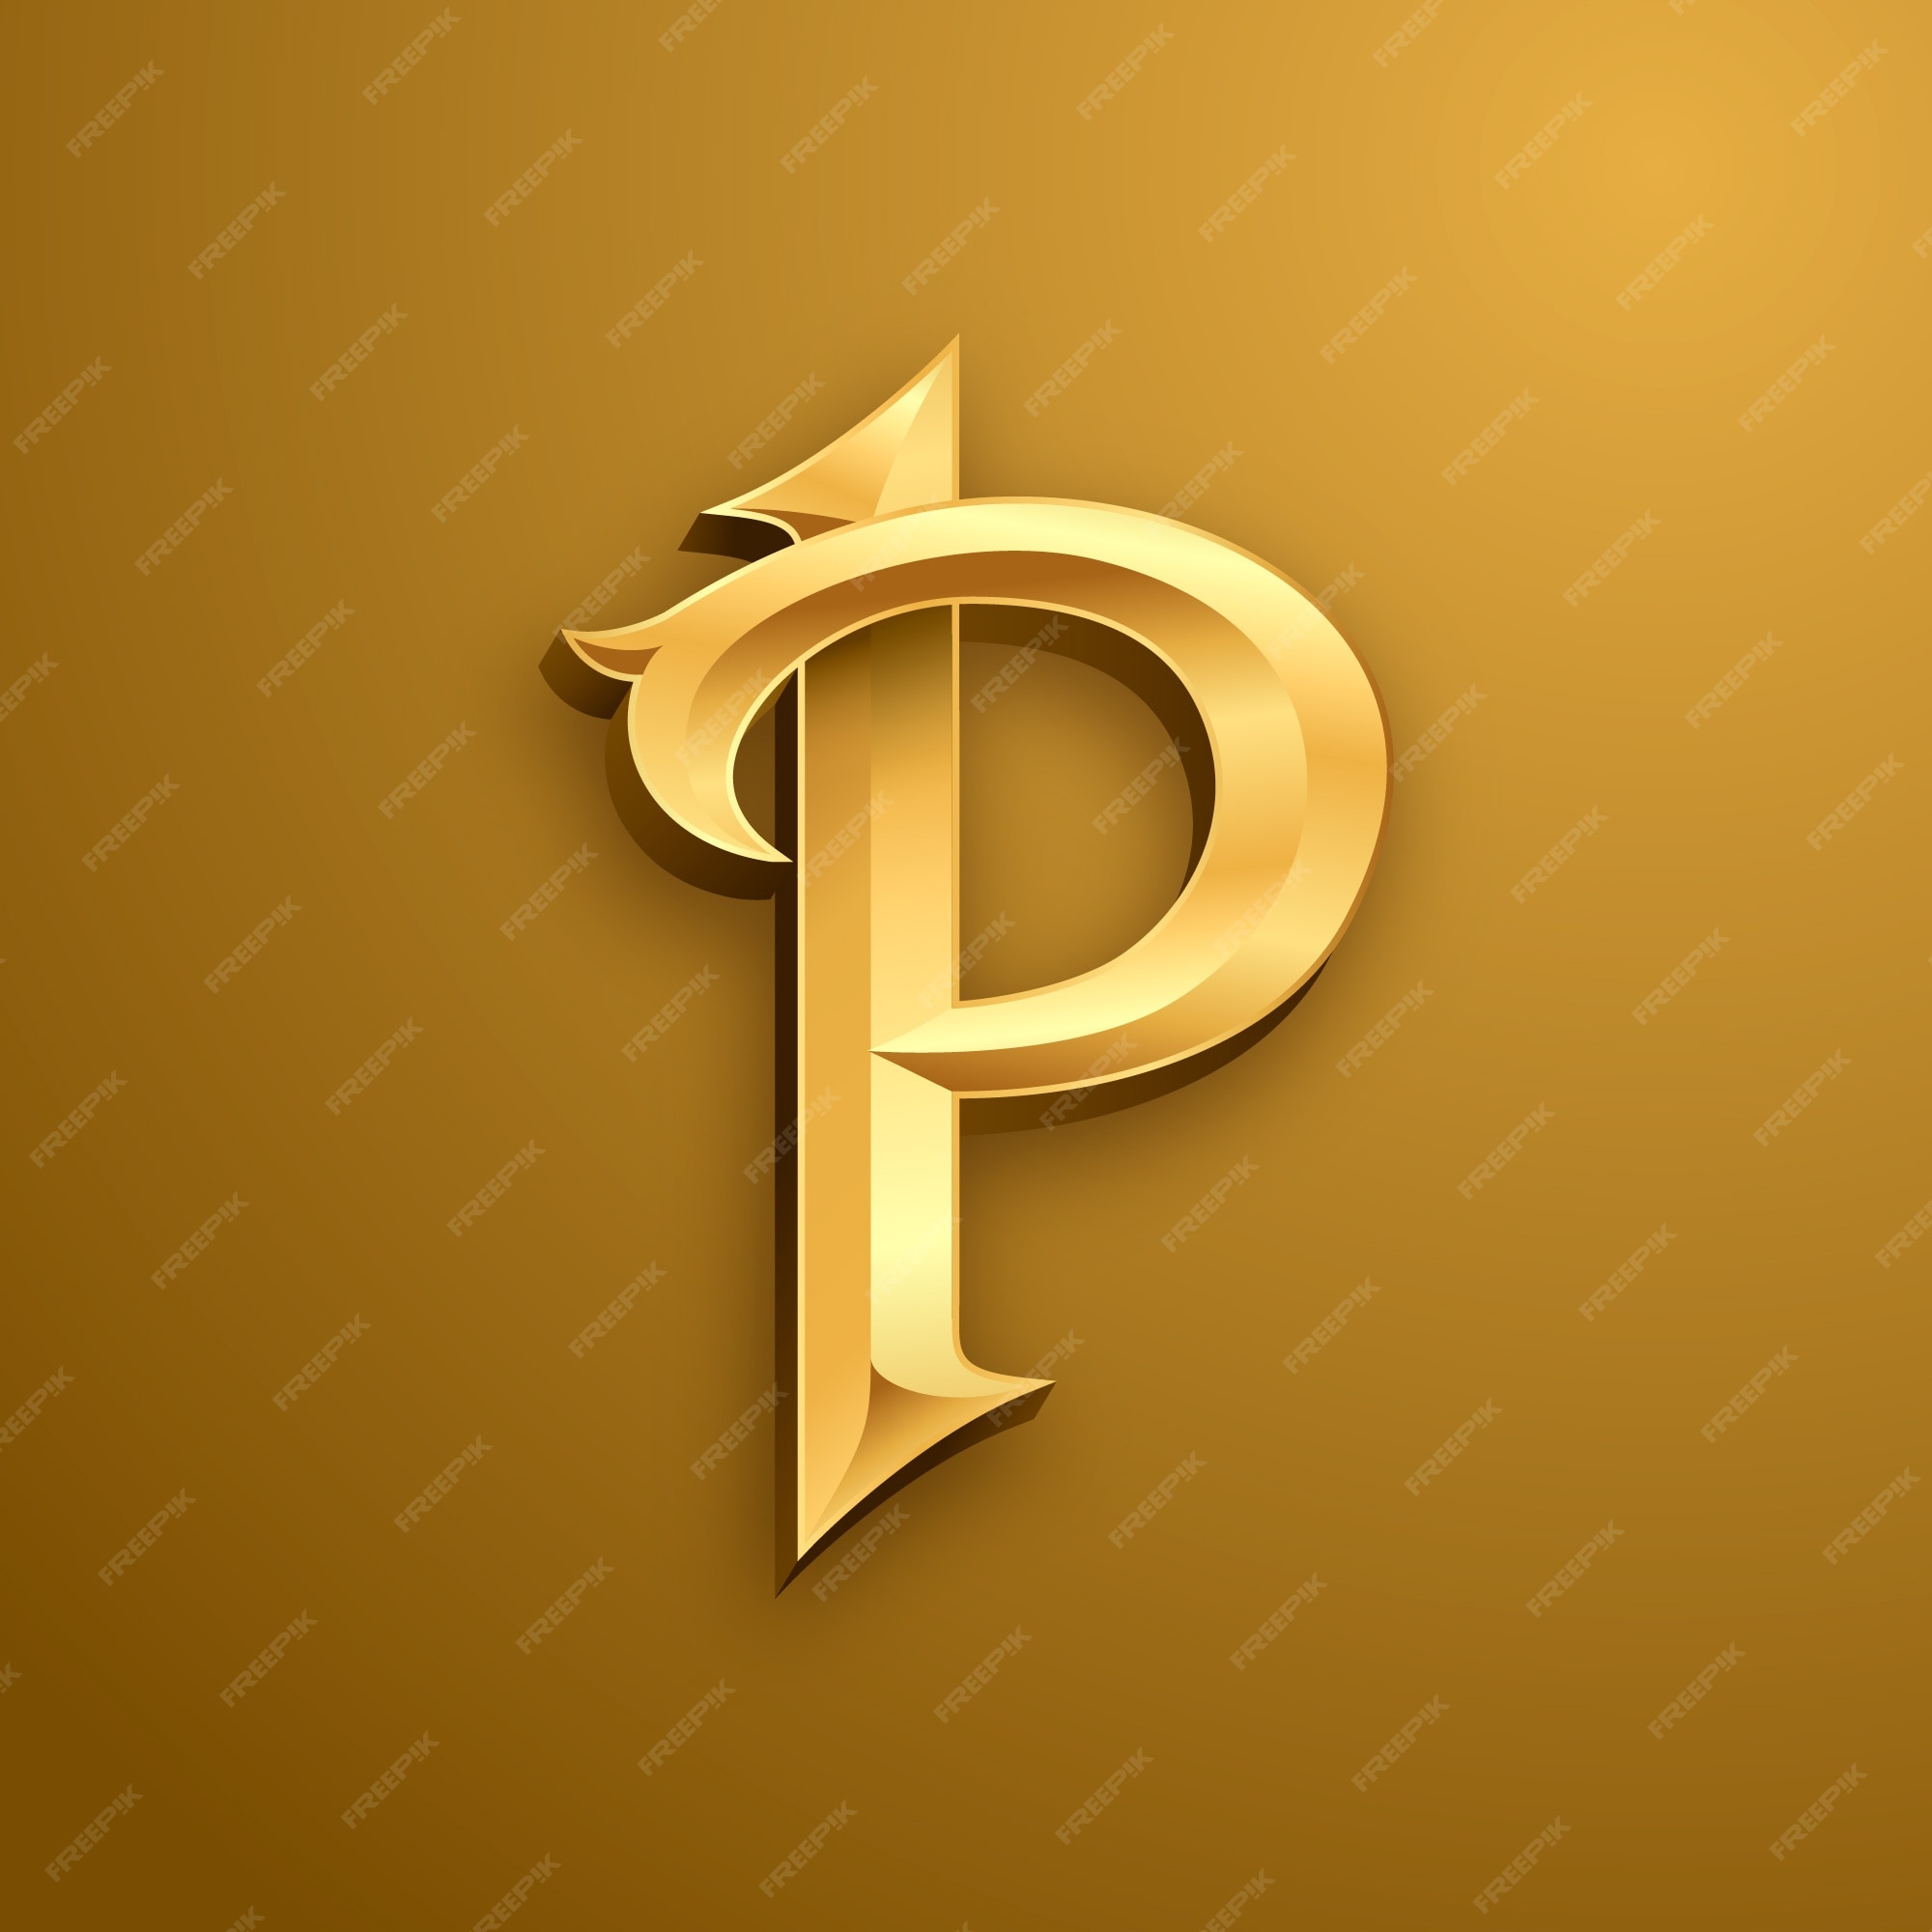 Pp Logo - Free Vectors & PSDs to Download